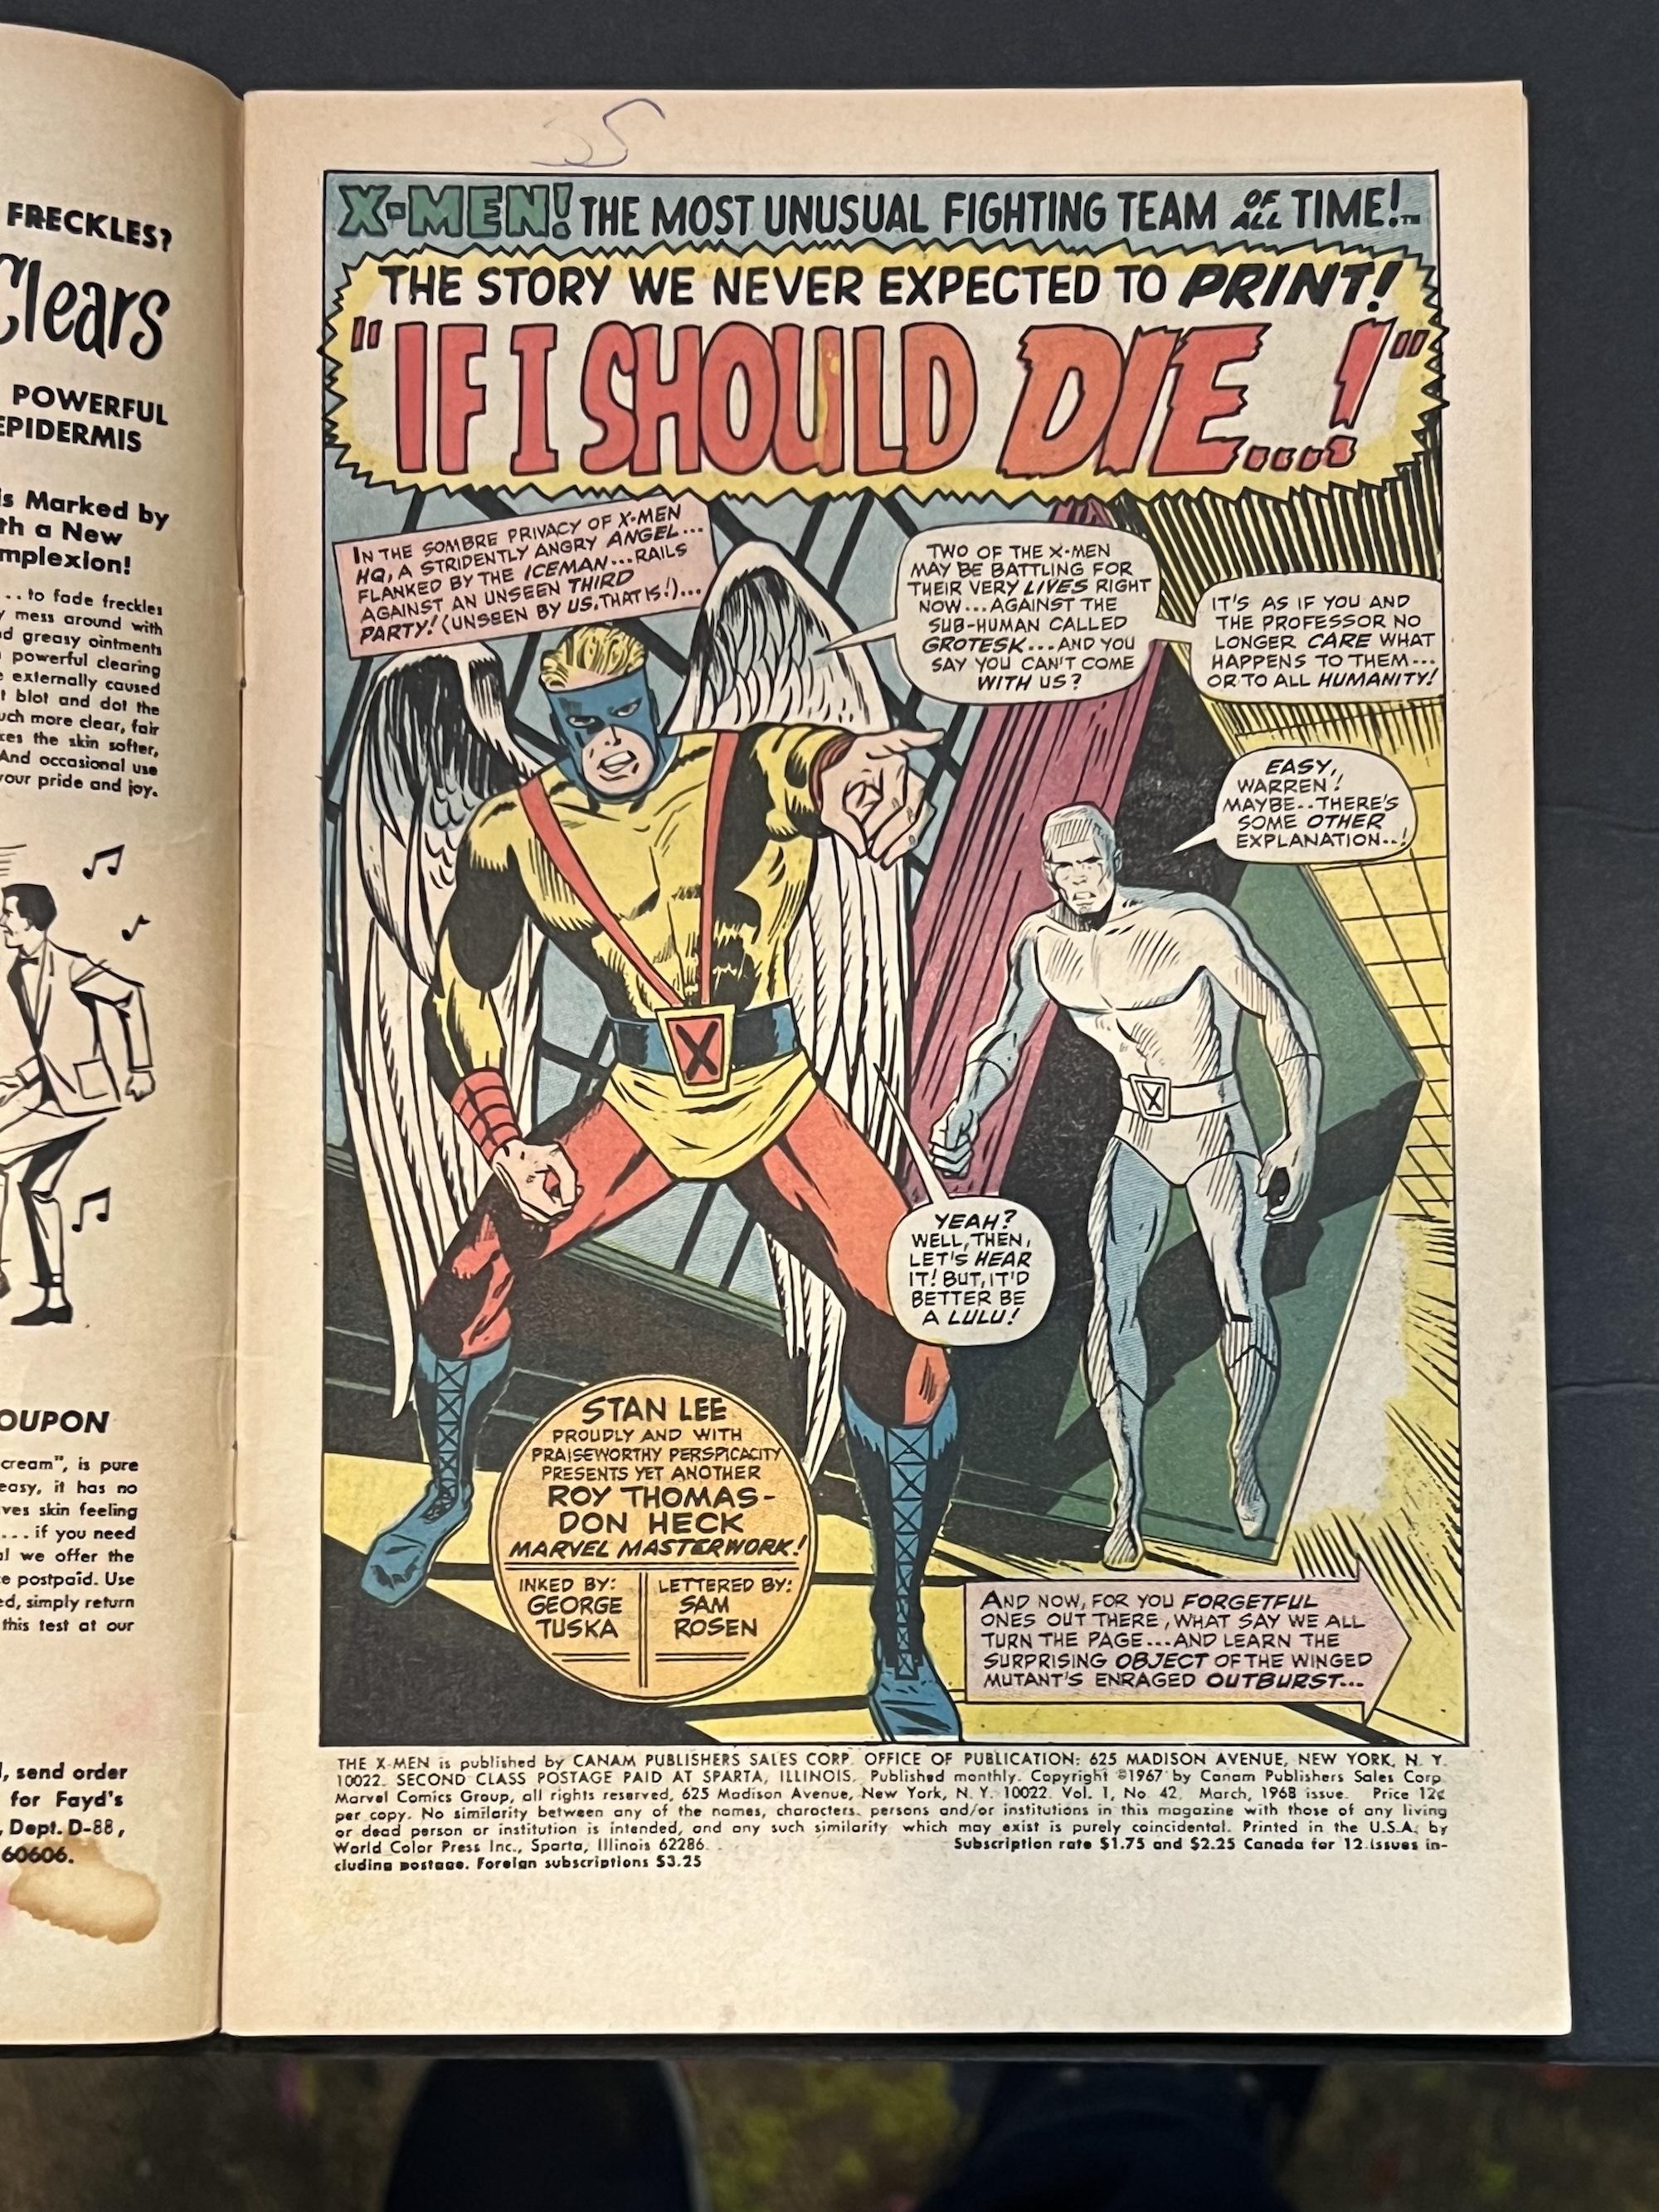 X-Men #42 Marvel Comic Book 1968